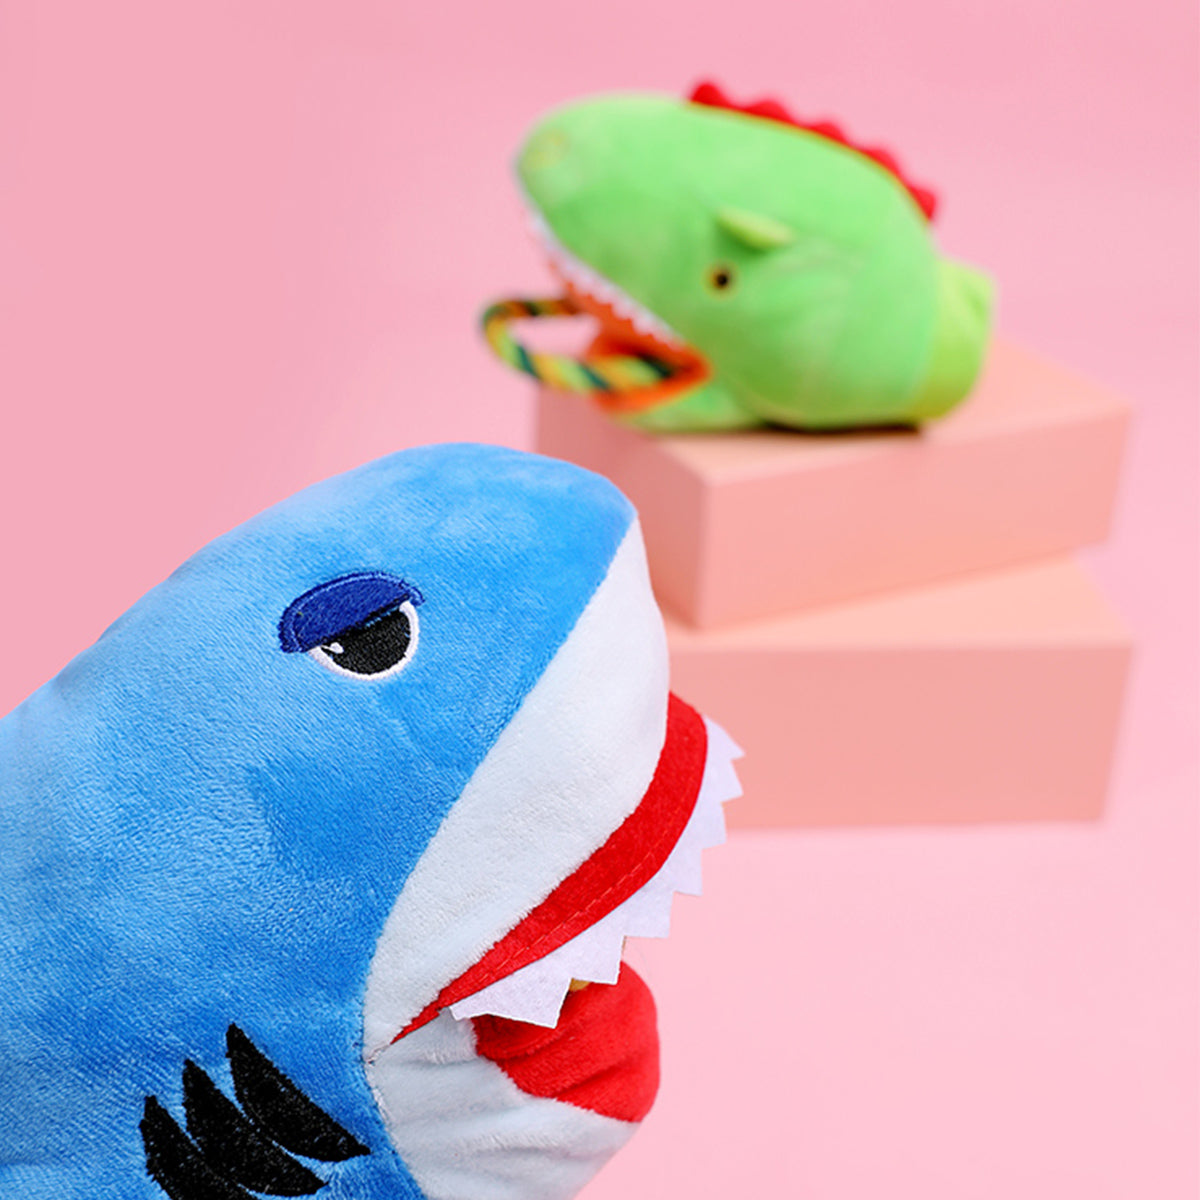 Pupwonders | Shark Glove Tug Dog Toy,Blue,Green